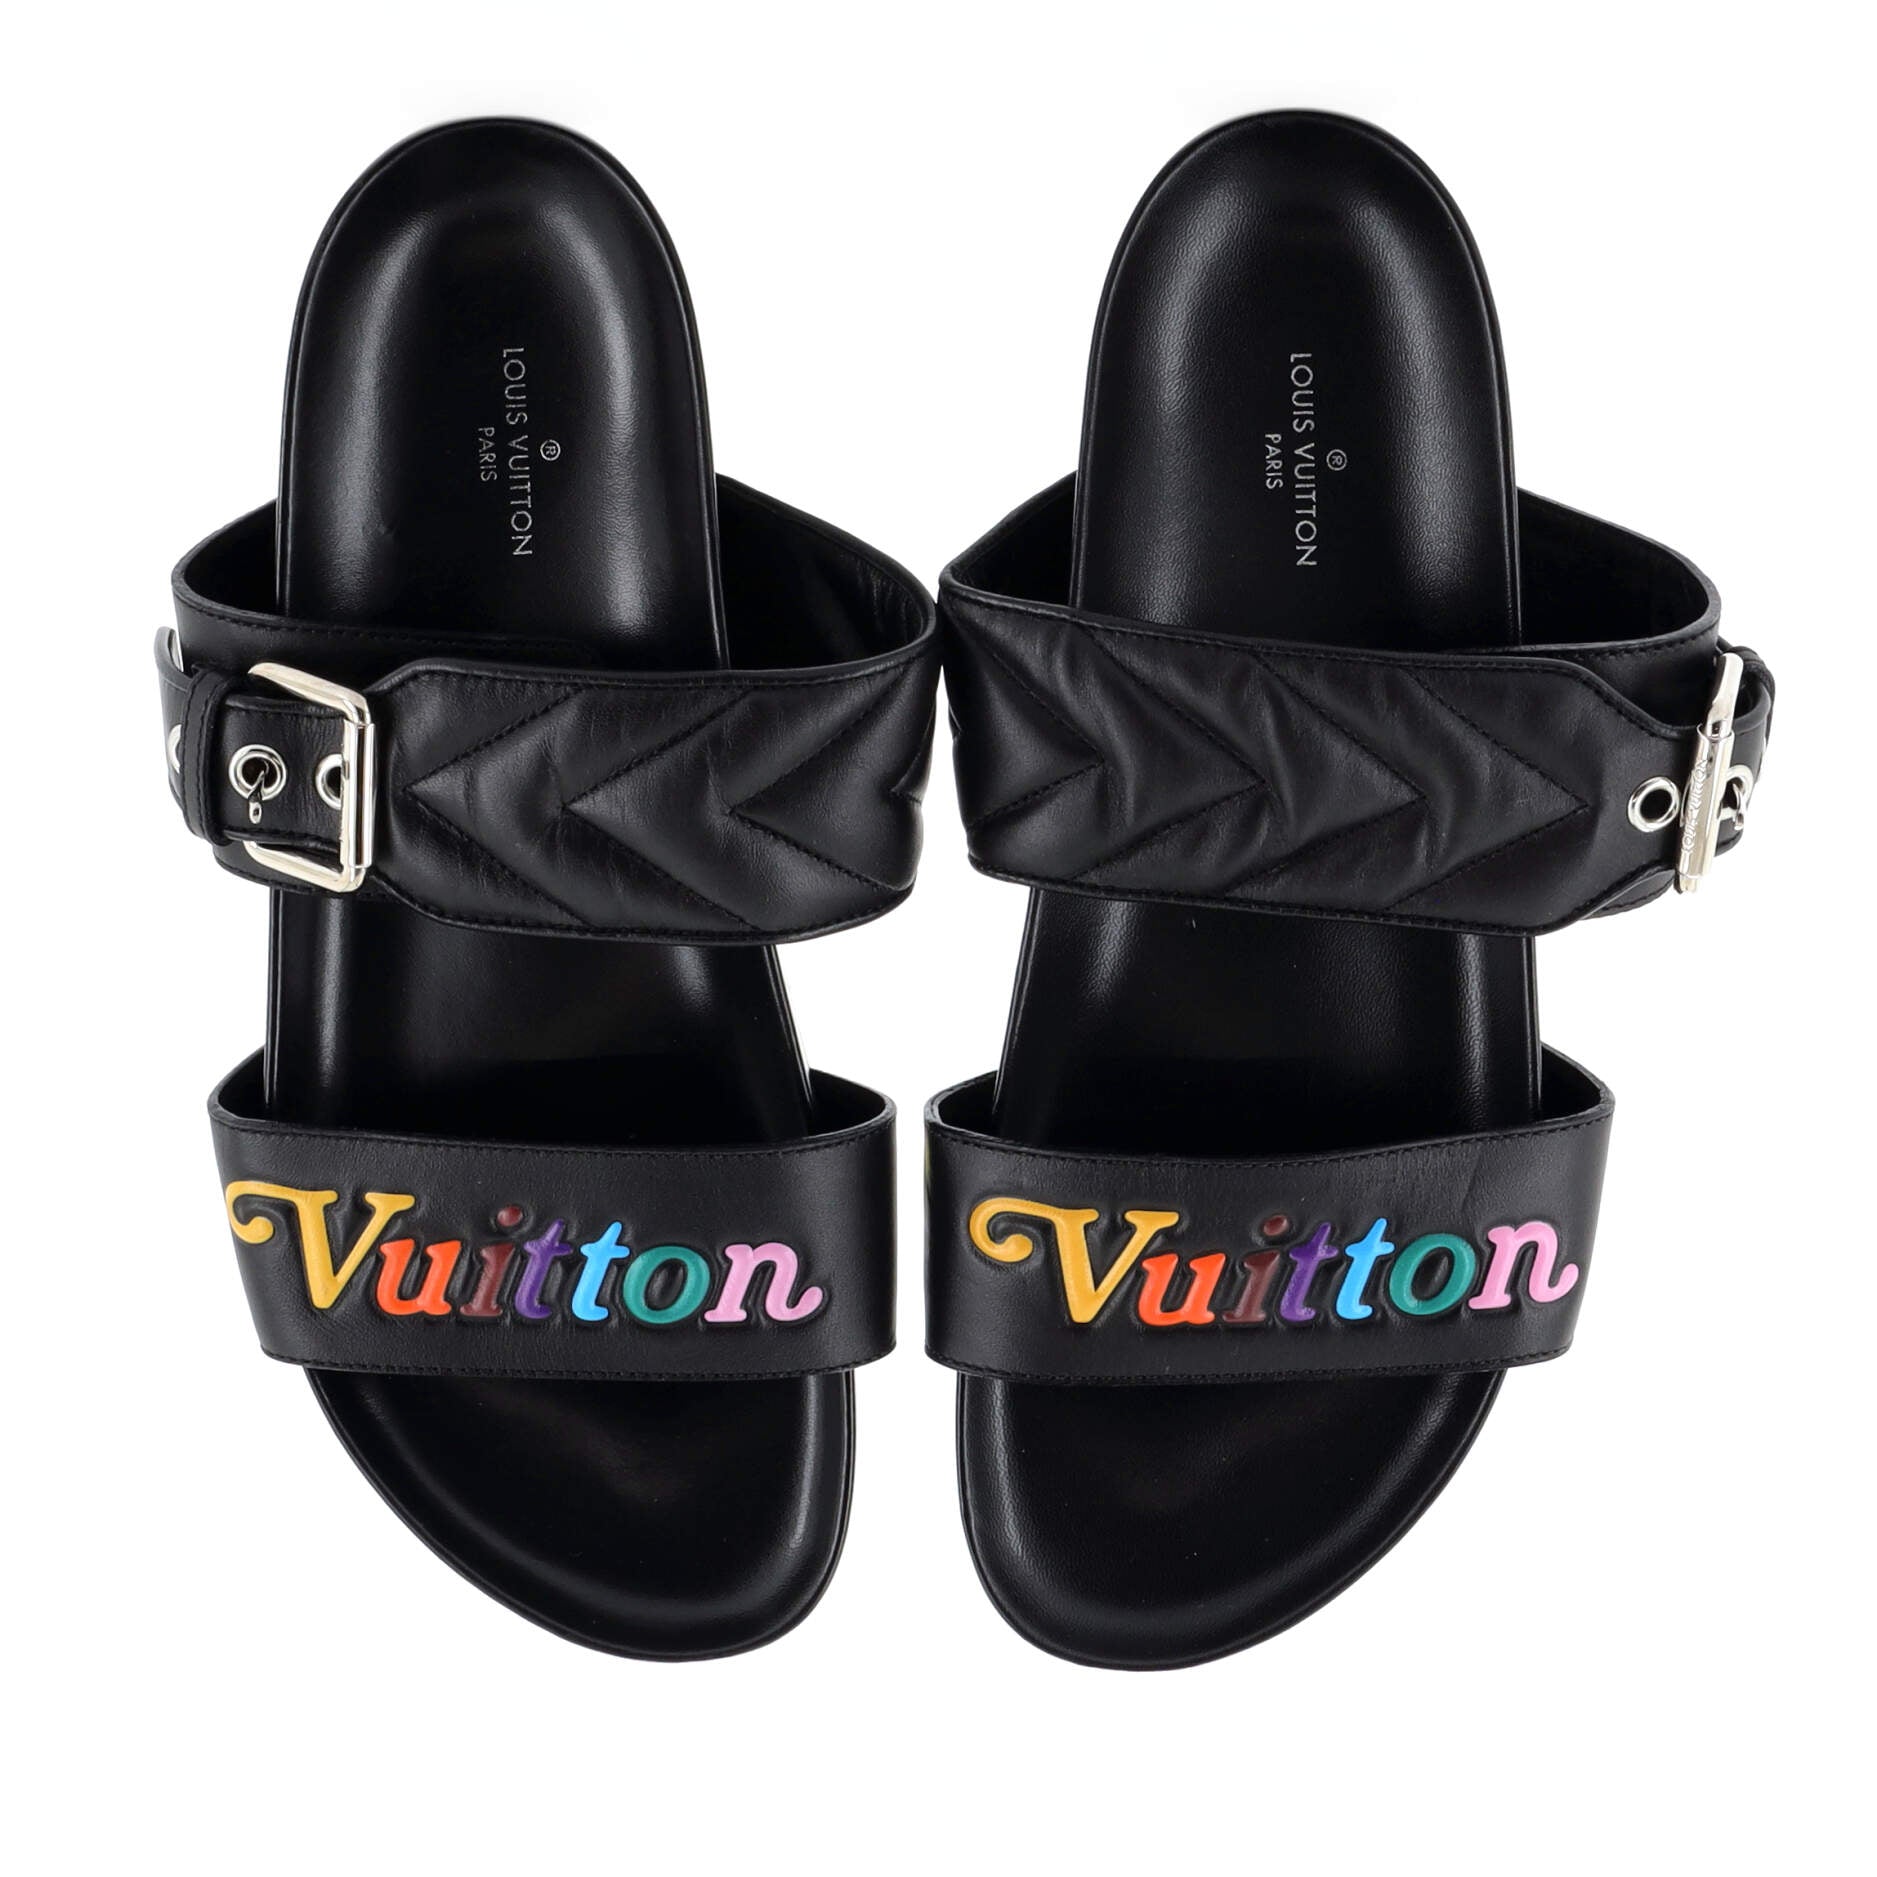 Louis Vuitton Bom Dia Sandal